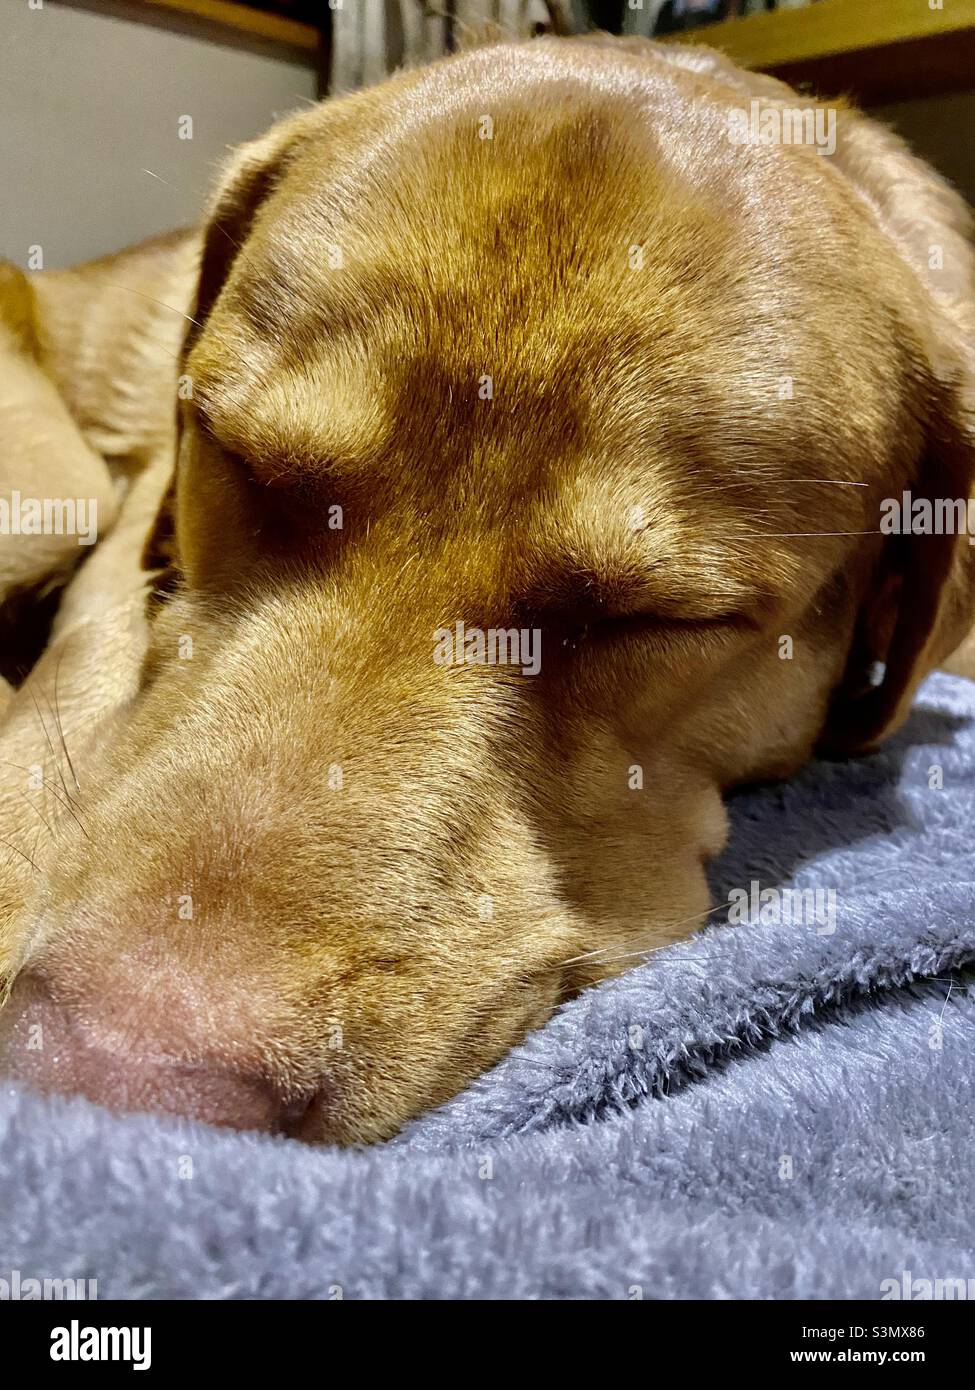 Close up of Sheprador dog sleeping on a blanket Stock Photo